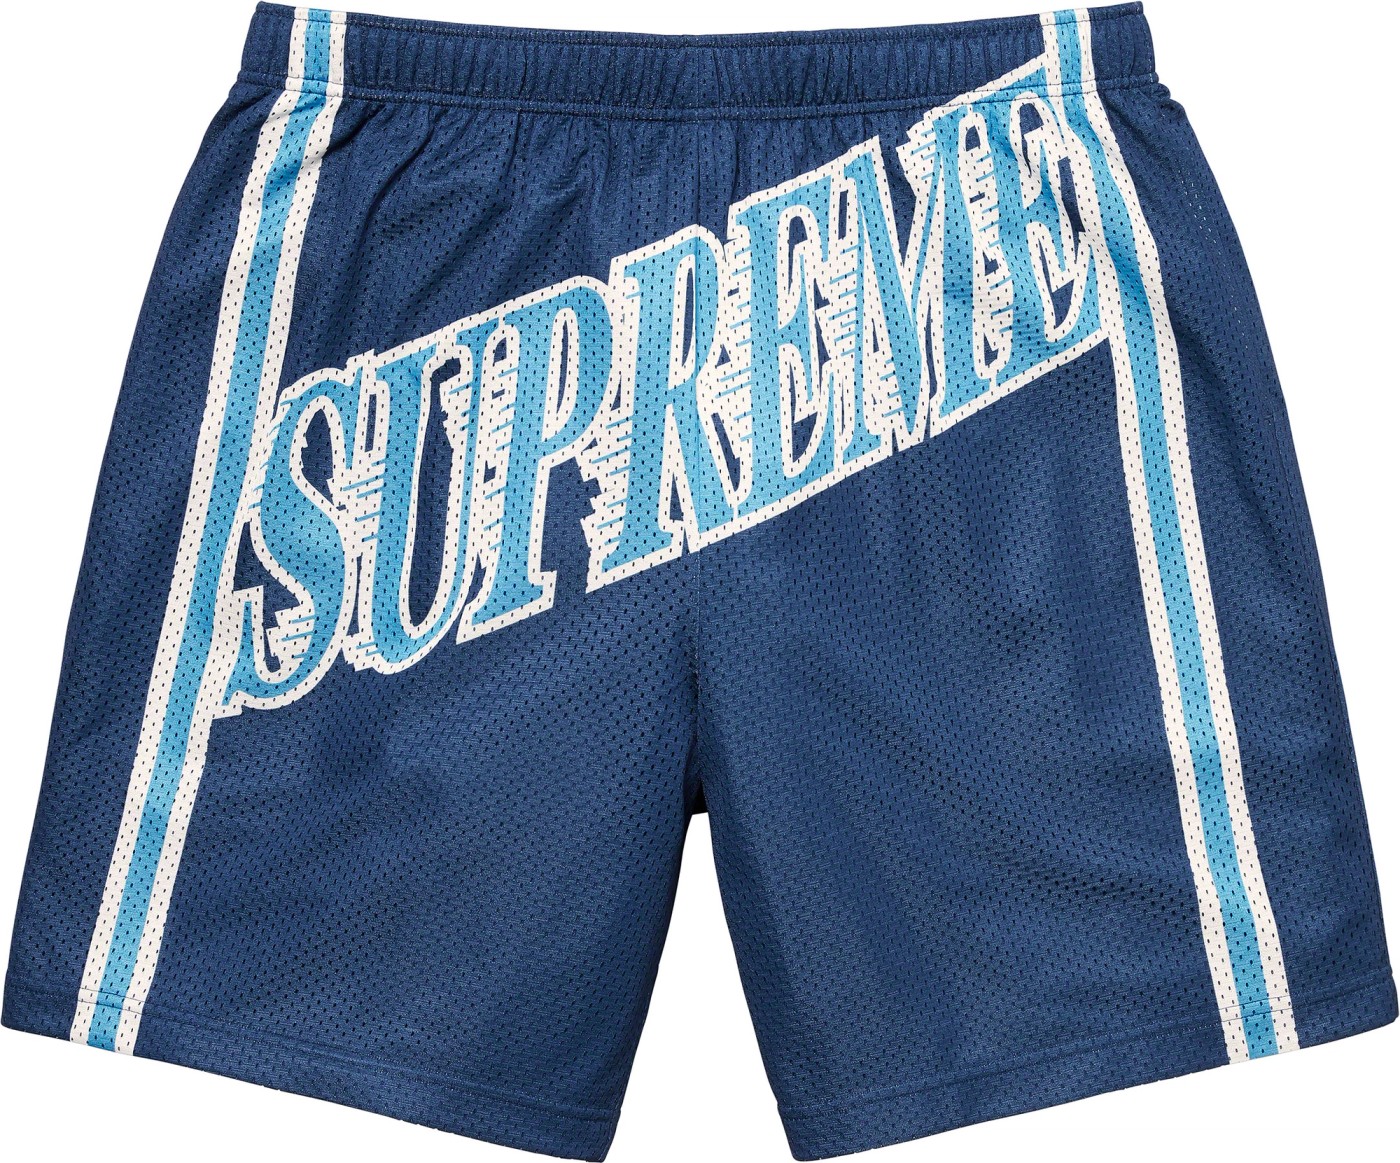 Supreme x Umbro Soccer Shorts - Farfetch